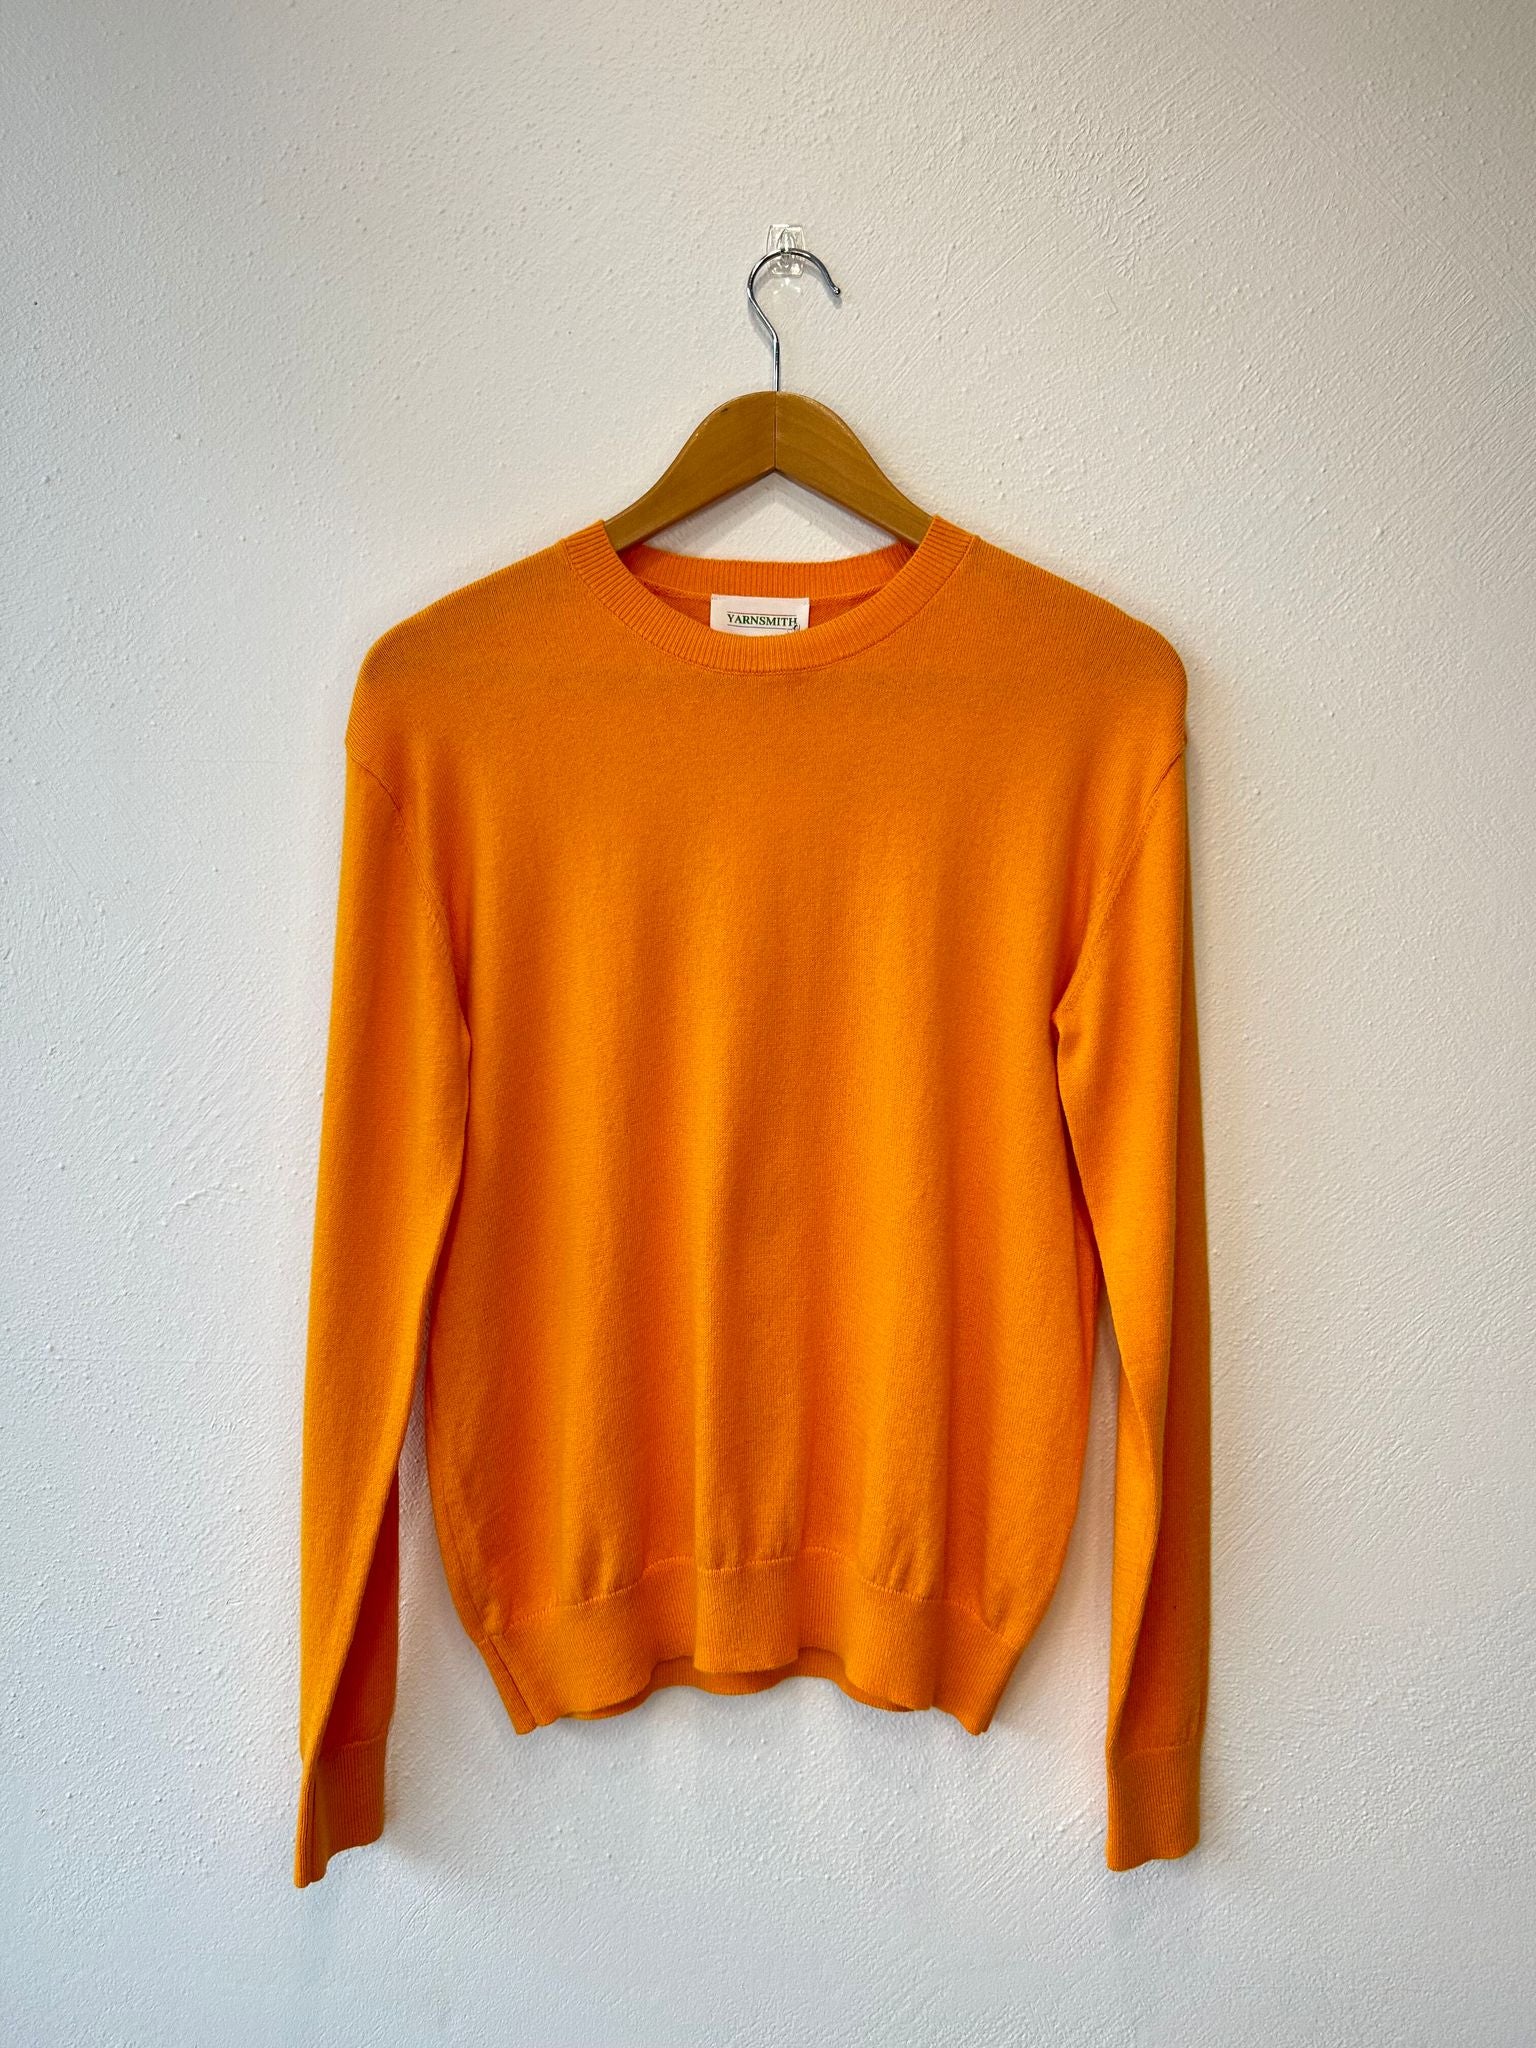 Sapphire Cotton/Cashmere L/S Knit Yarnsmith BRK3B Orange